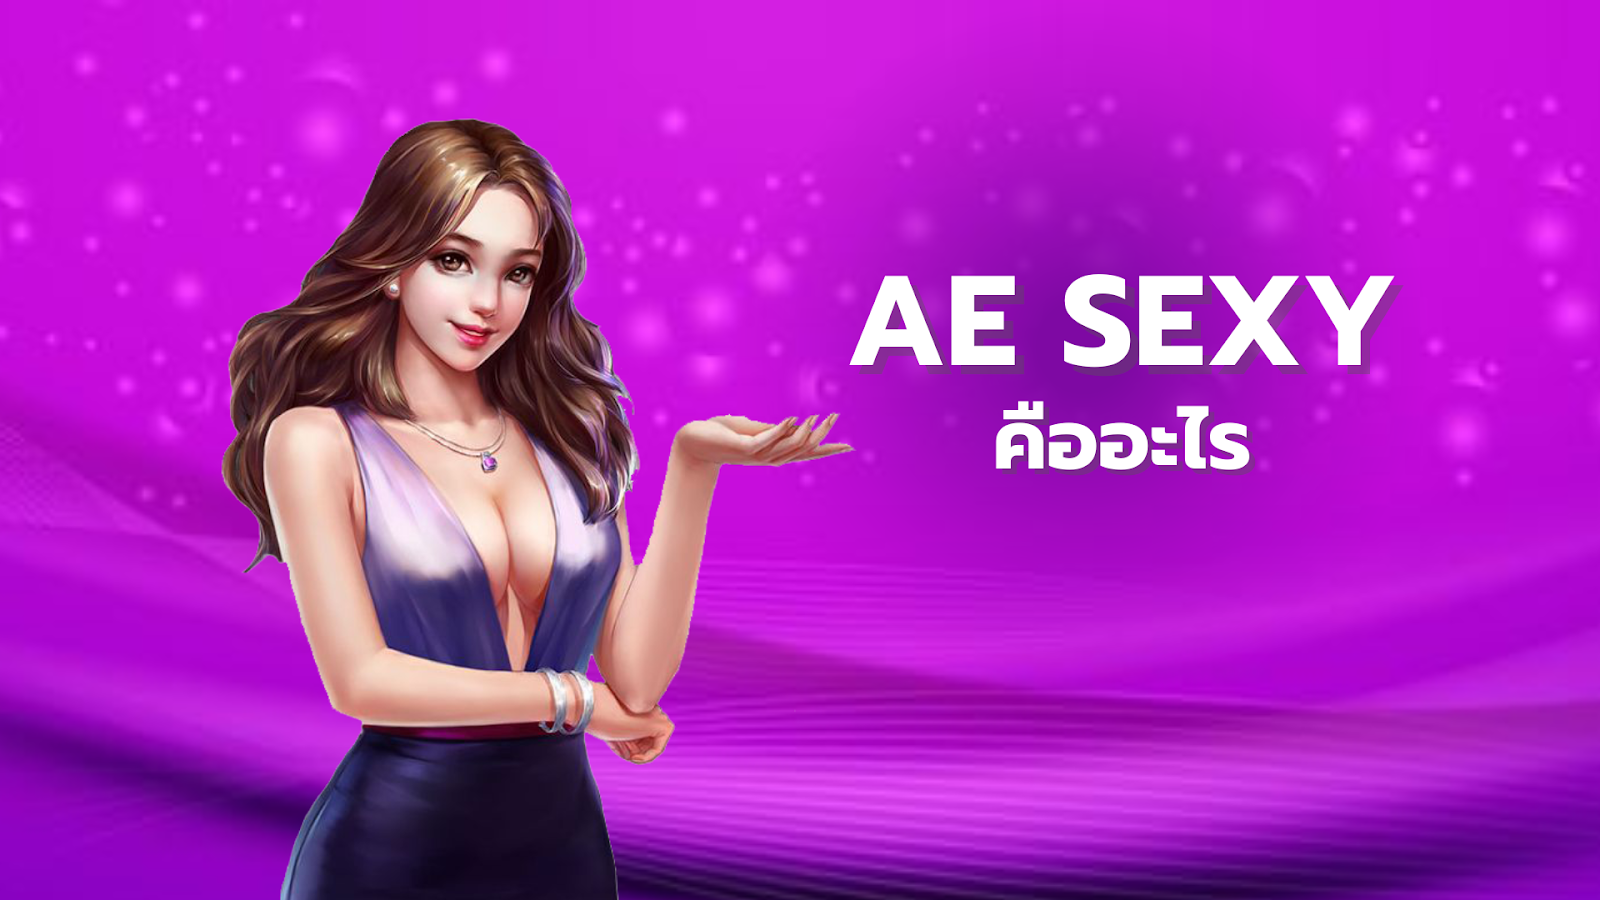 Ae Sexy